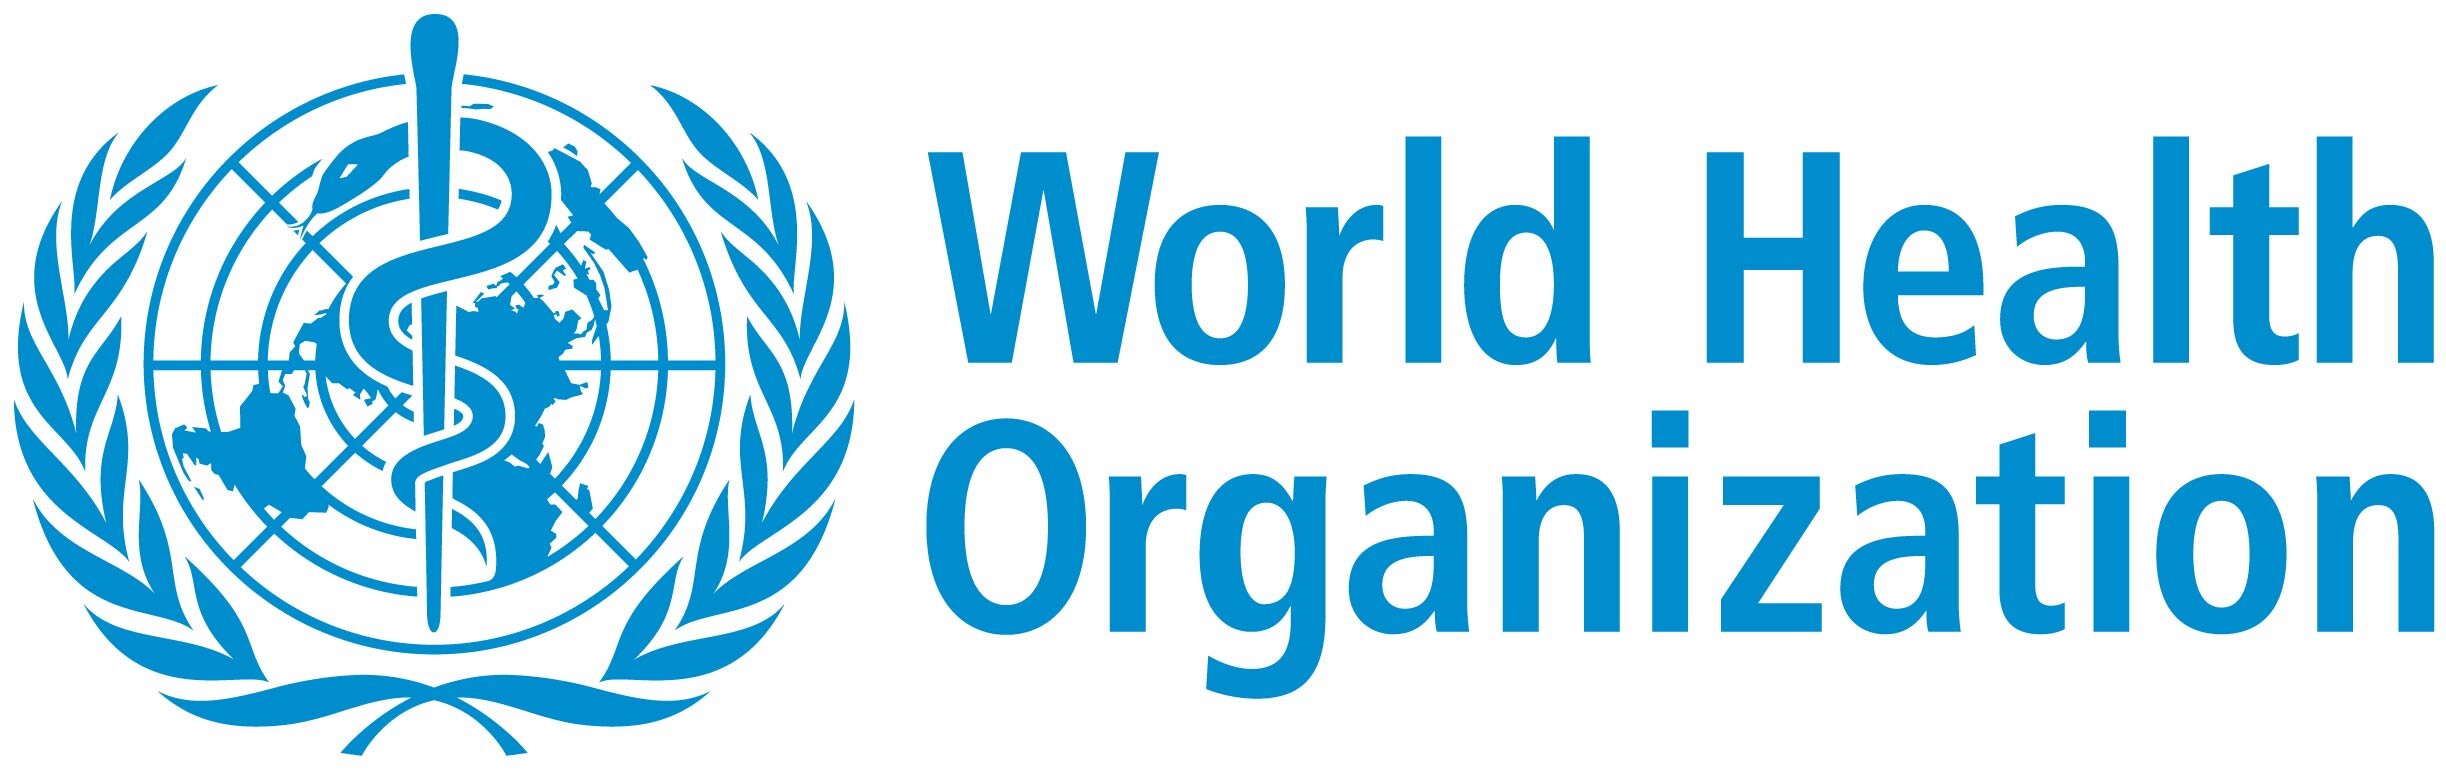 Image: logo of World Health Organization (WHO)